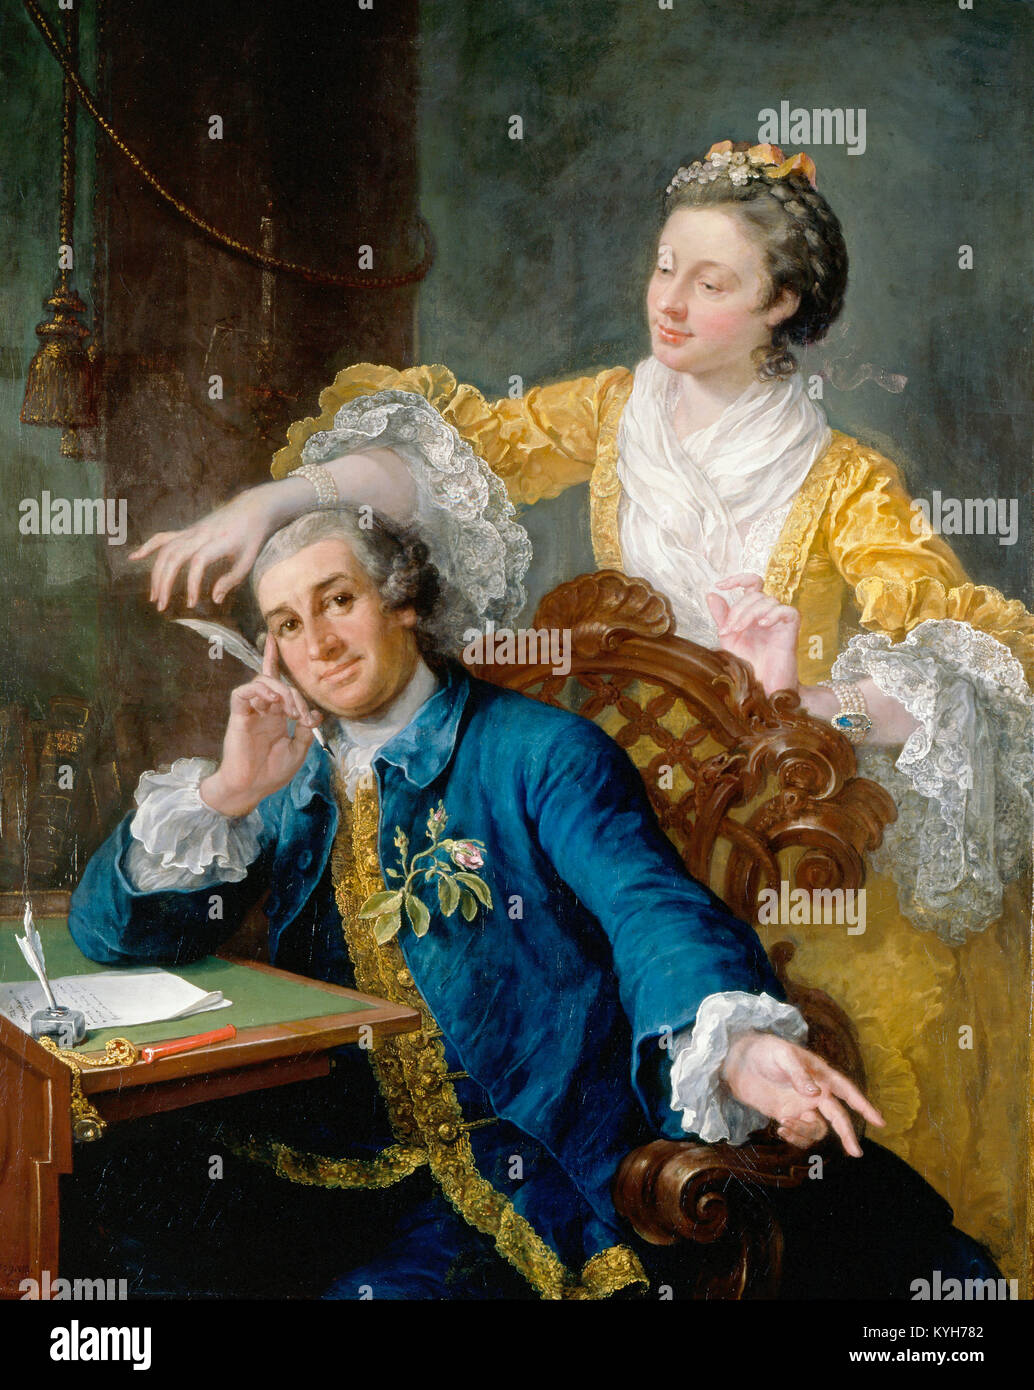 David Garrick and his wife, Eva Marie Veigel, painted by William Hogarth Stock Photo